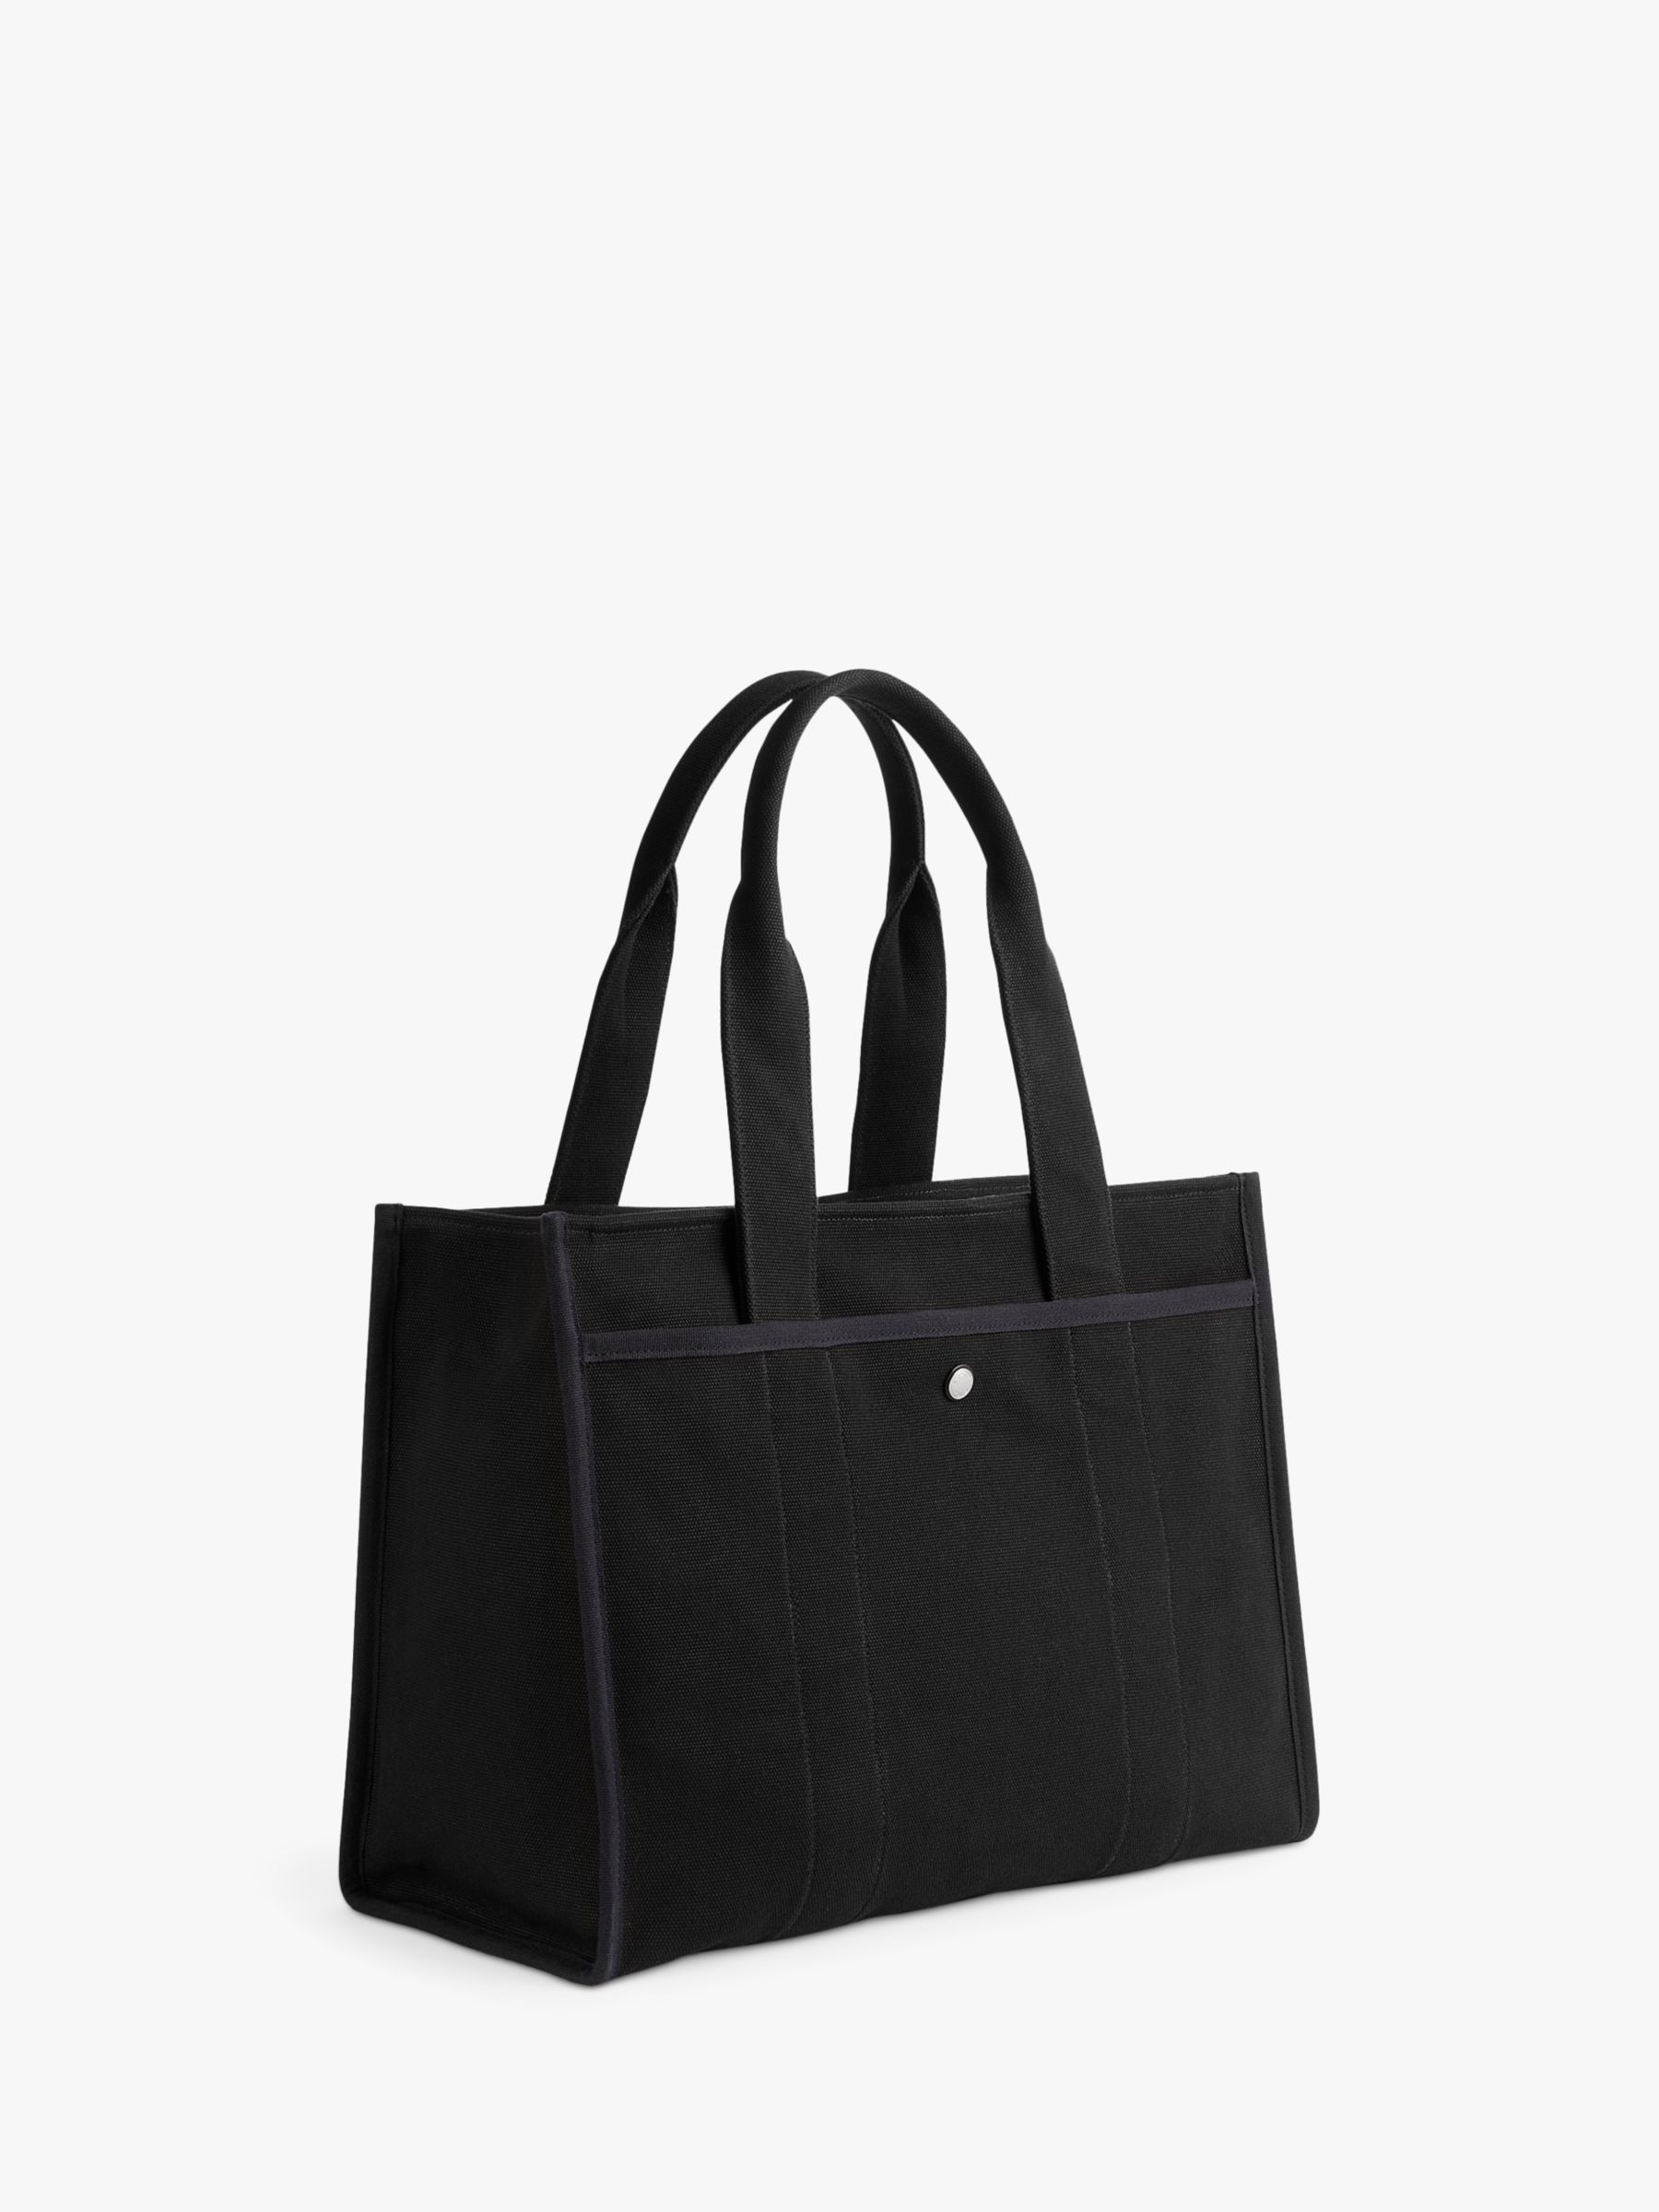 Buy Coach Cargo Large Tote Bag, Black Online at johnlewis.com